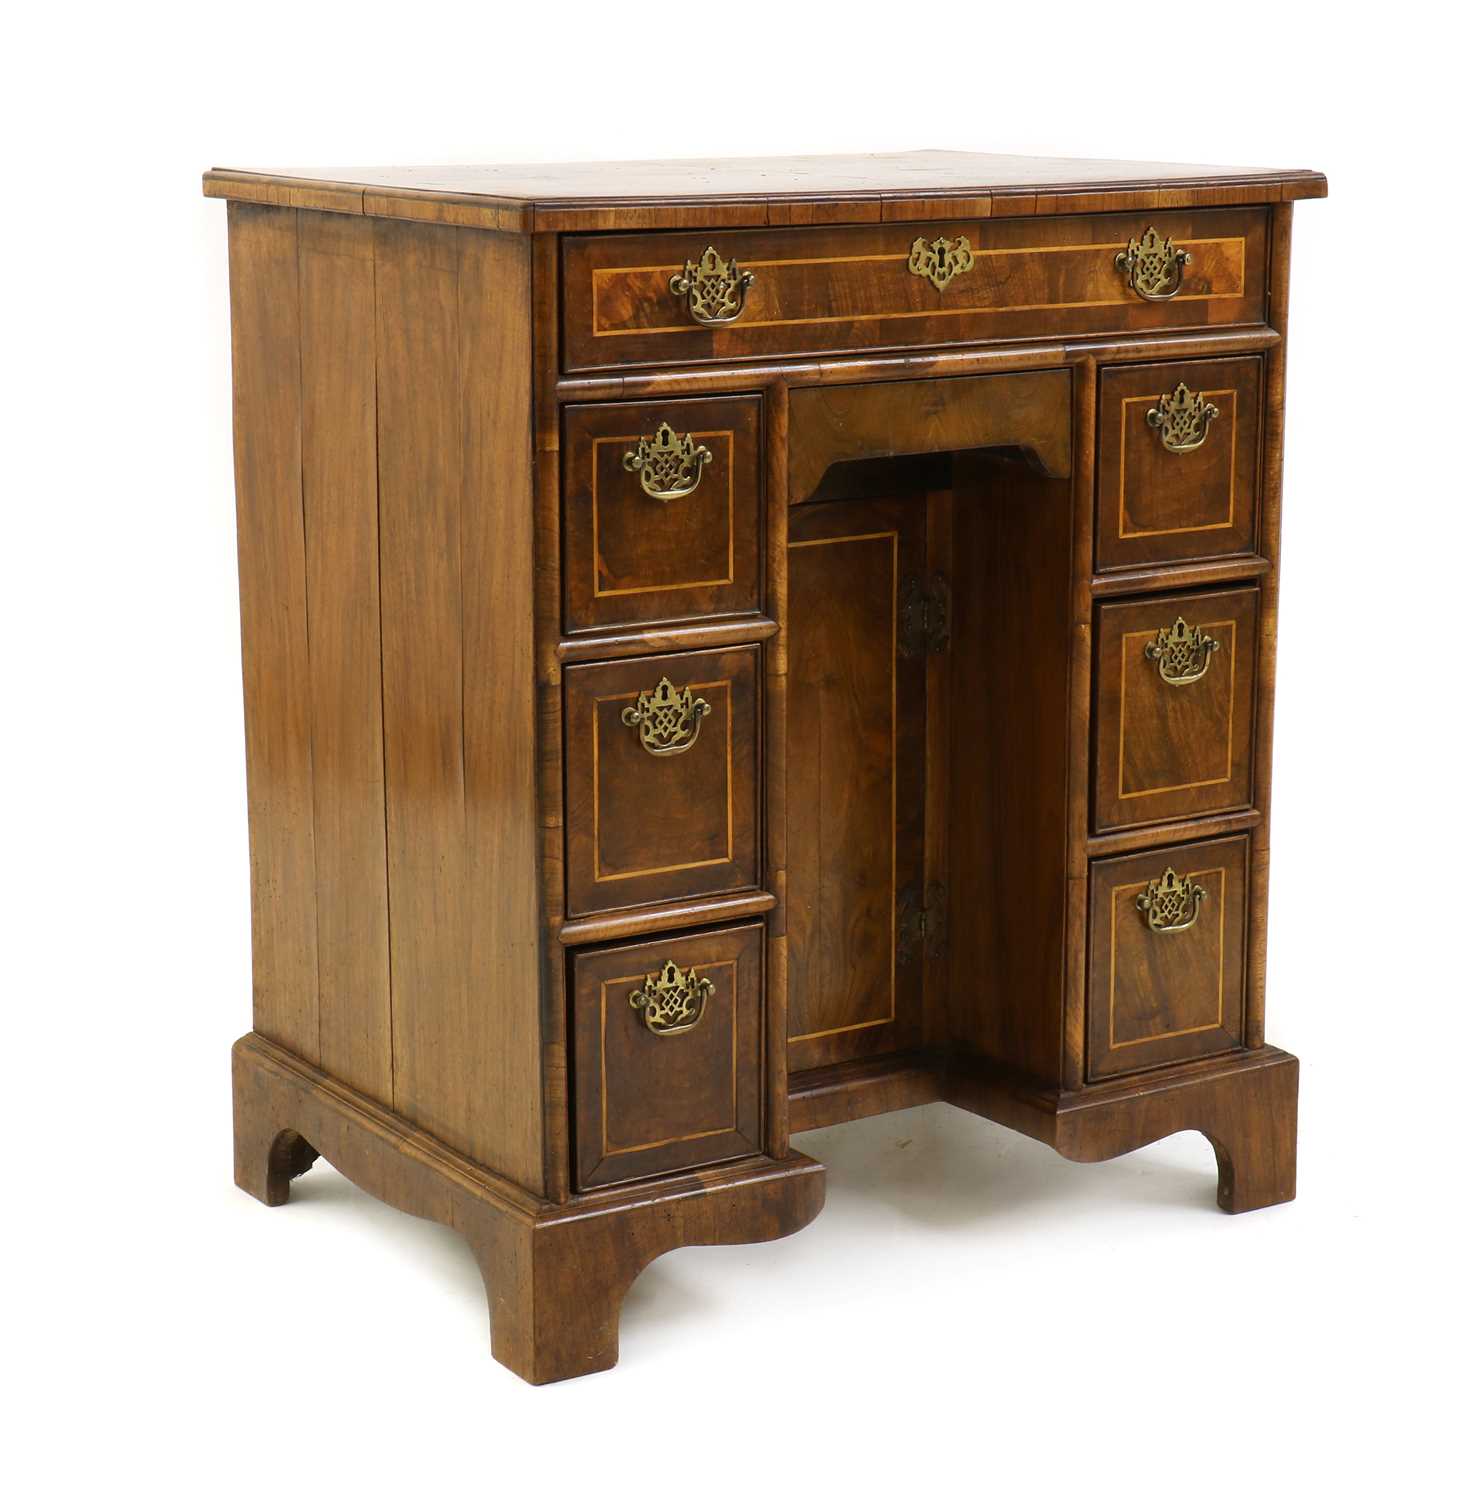 A George I style strung walnut kneehole desk,